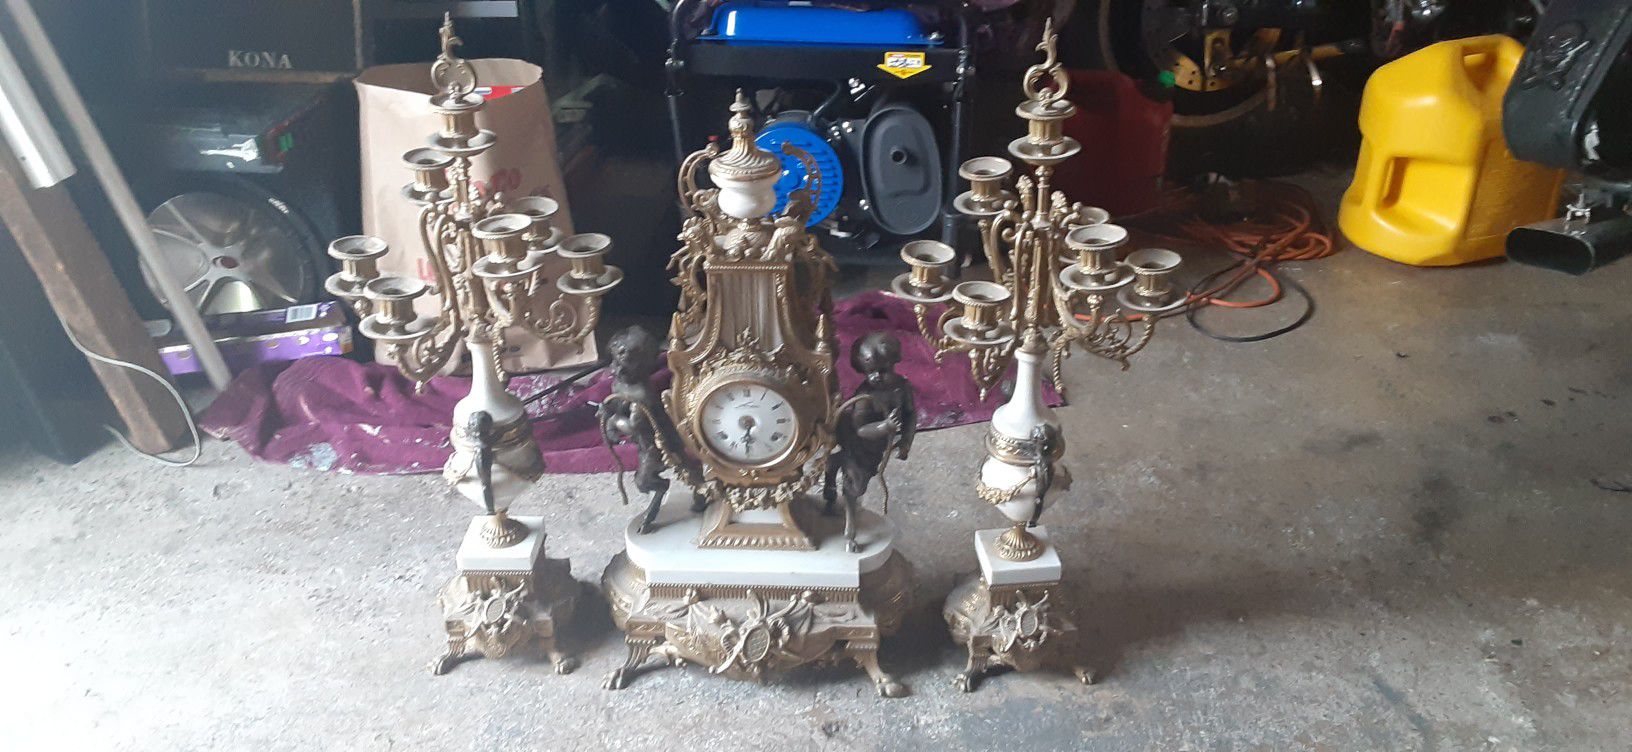 3 piece brevettato imperial clock and candelabra set